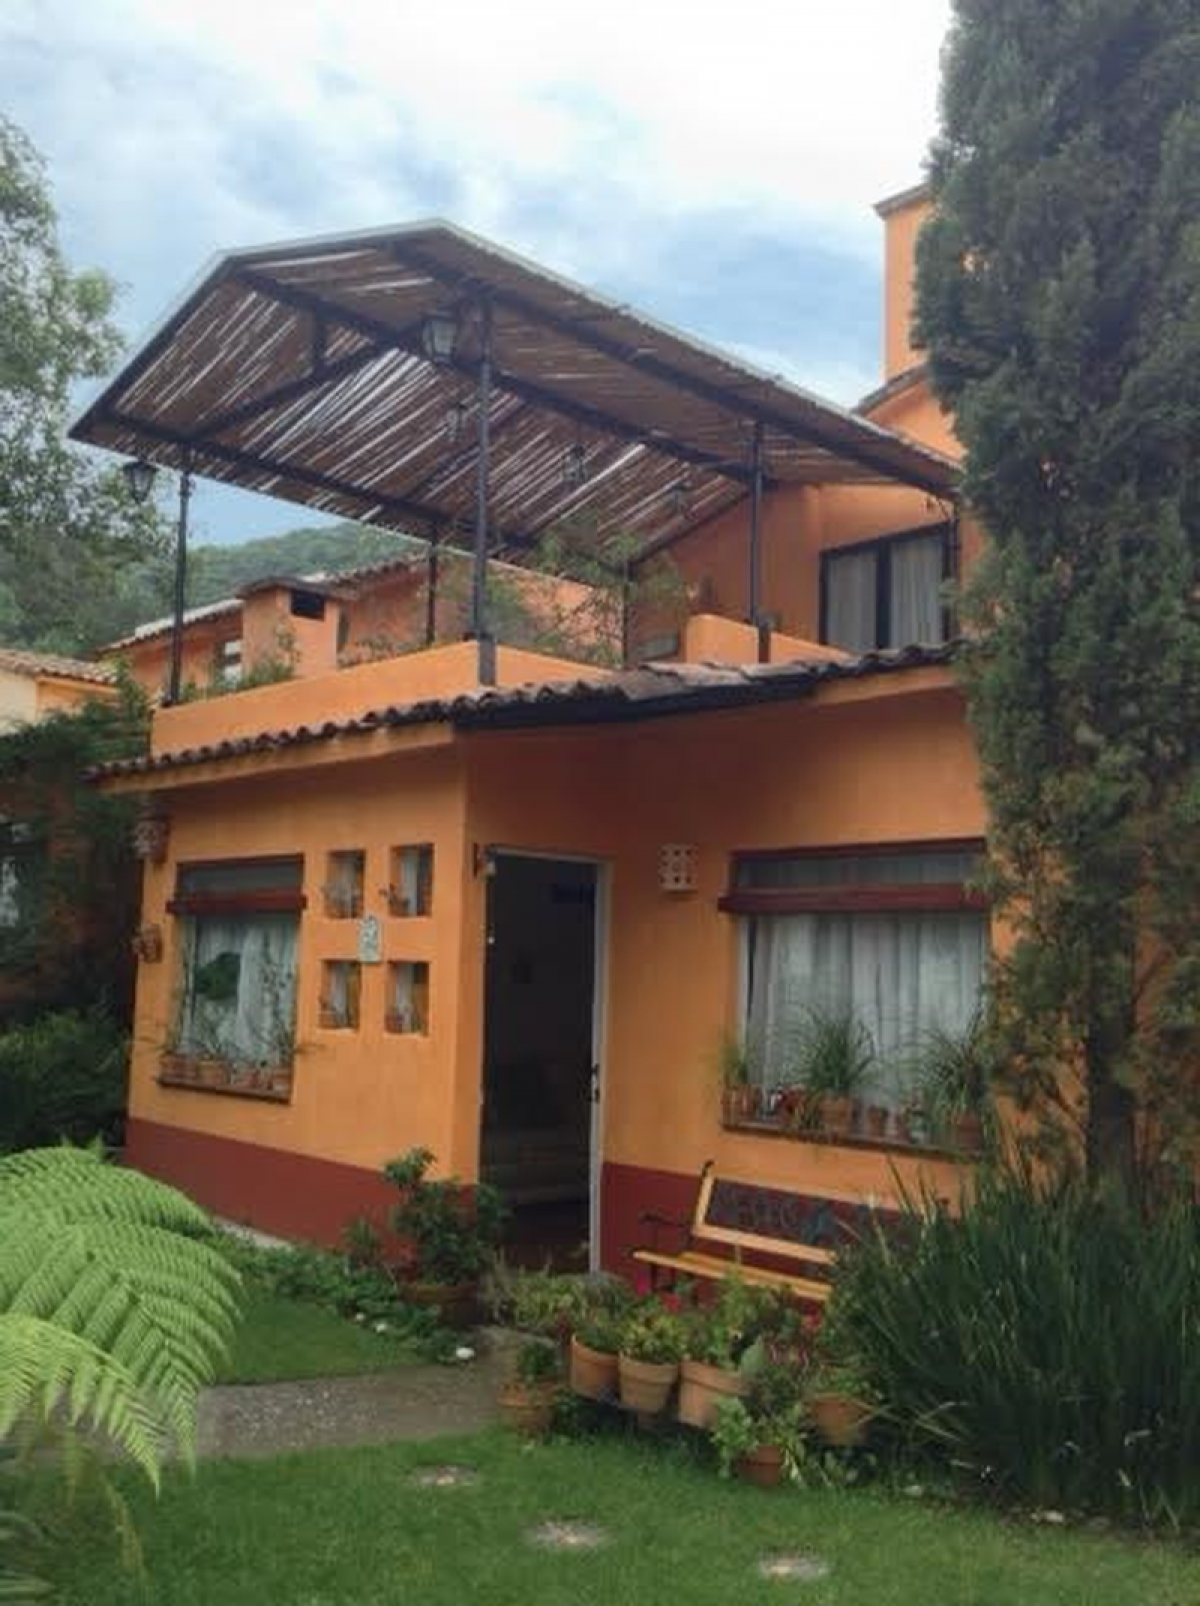 Picture of Home For Sale in Valle De Bravo, Mexico, Mexico